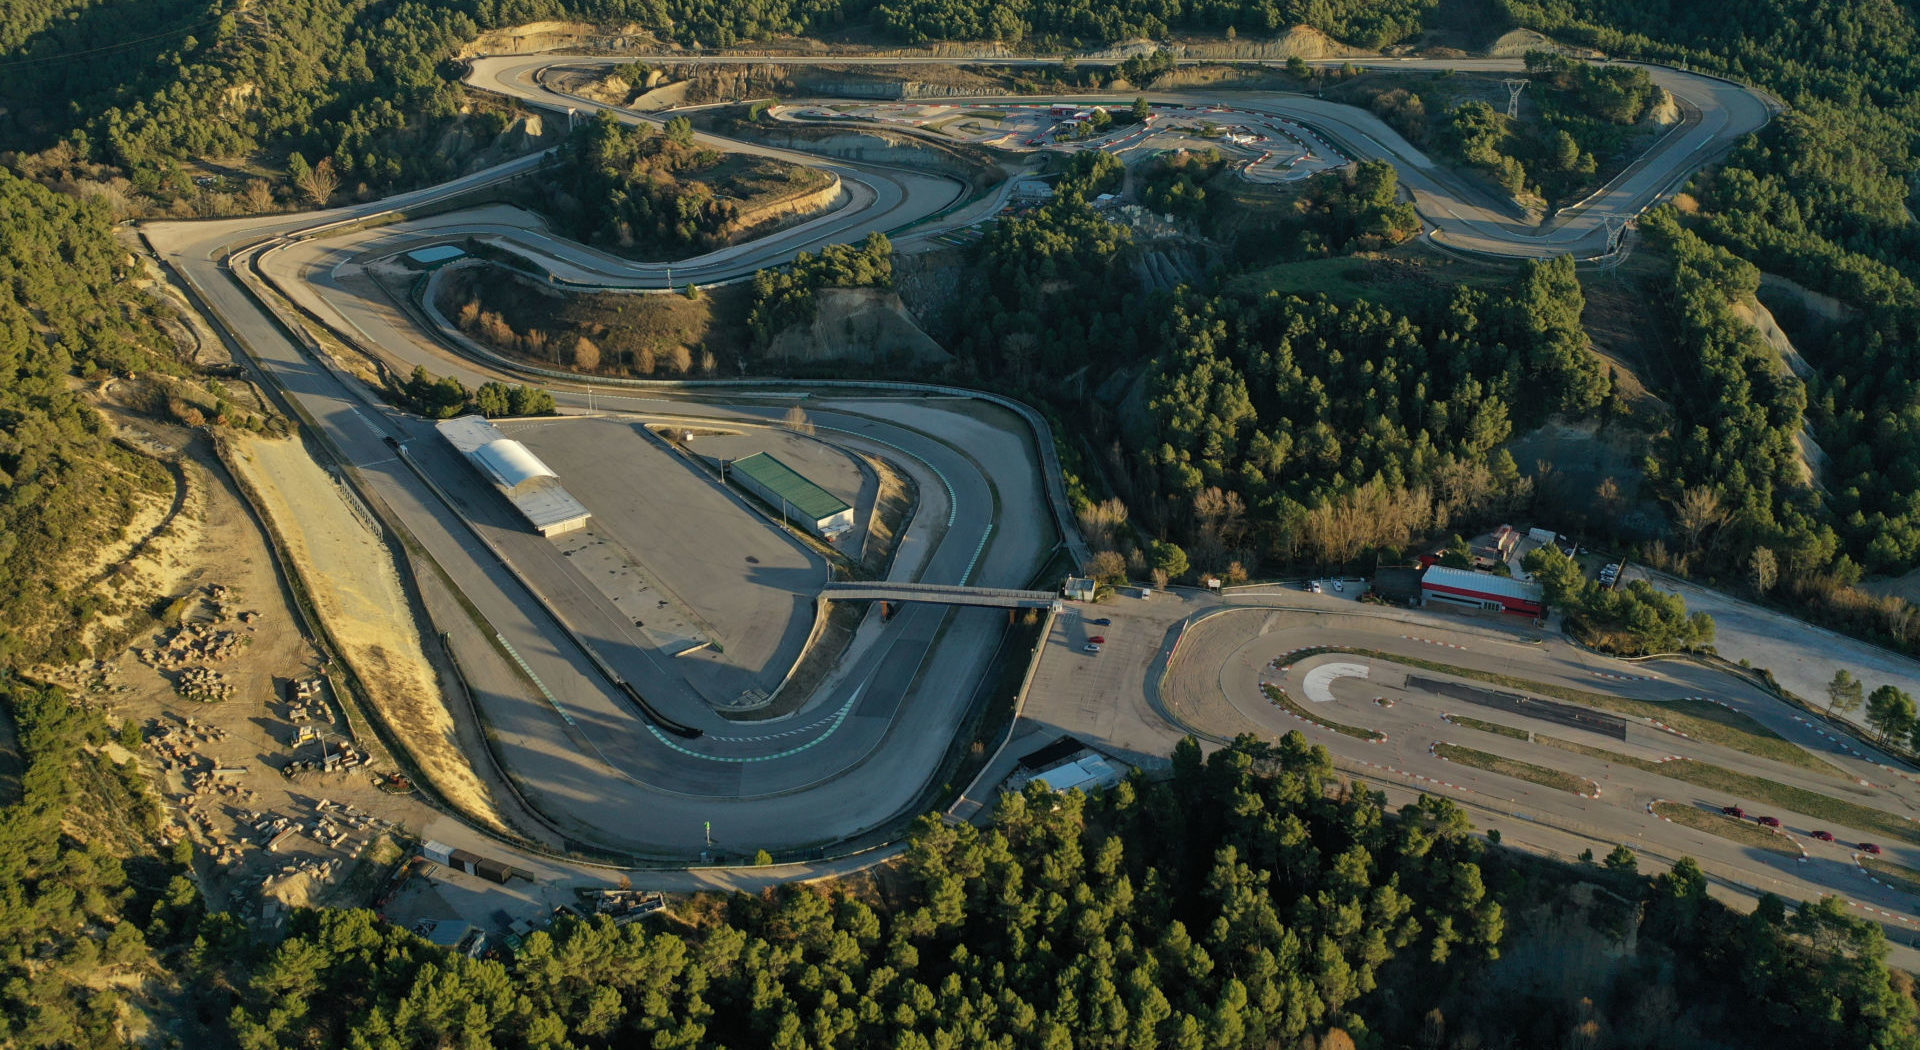 Campus Circuit Parcmotor in Castellolì, Spain, near Barcelona. Photo courtesy Dorna.